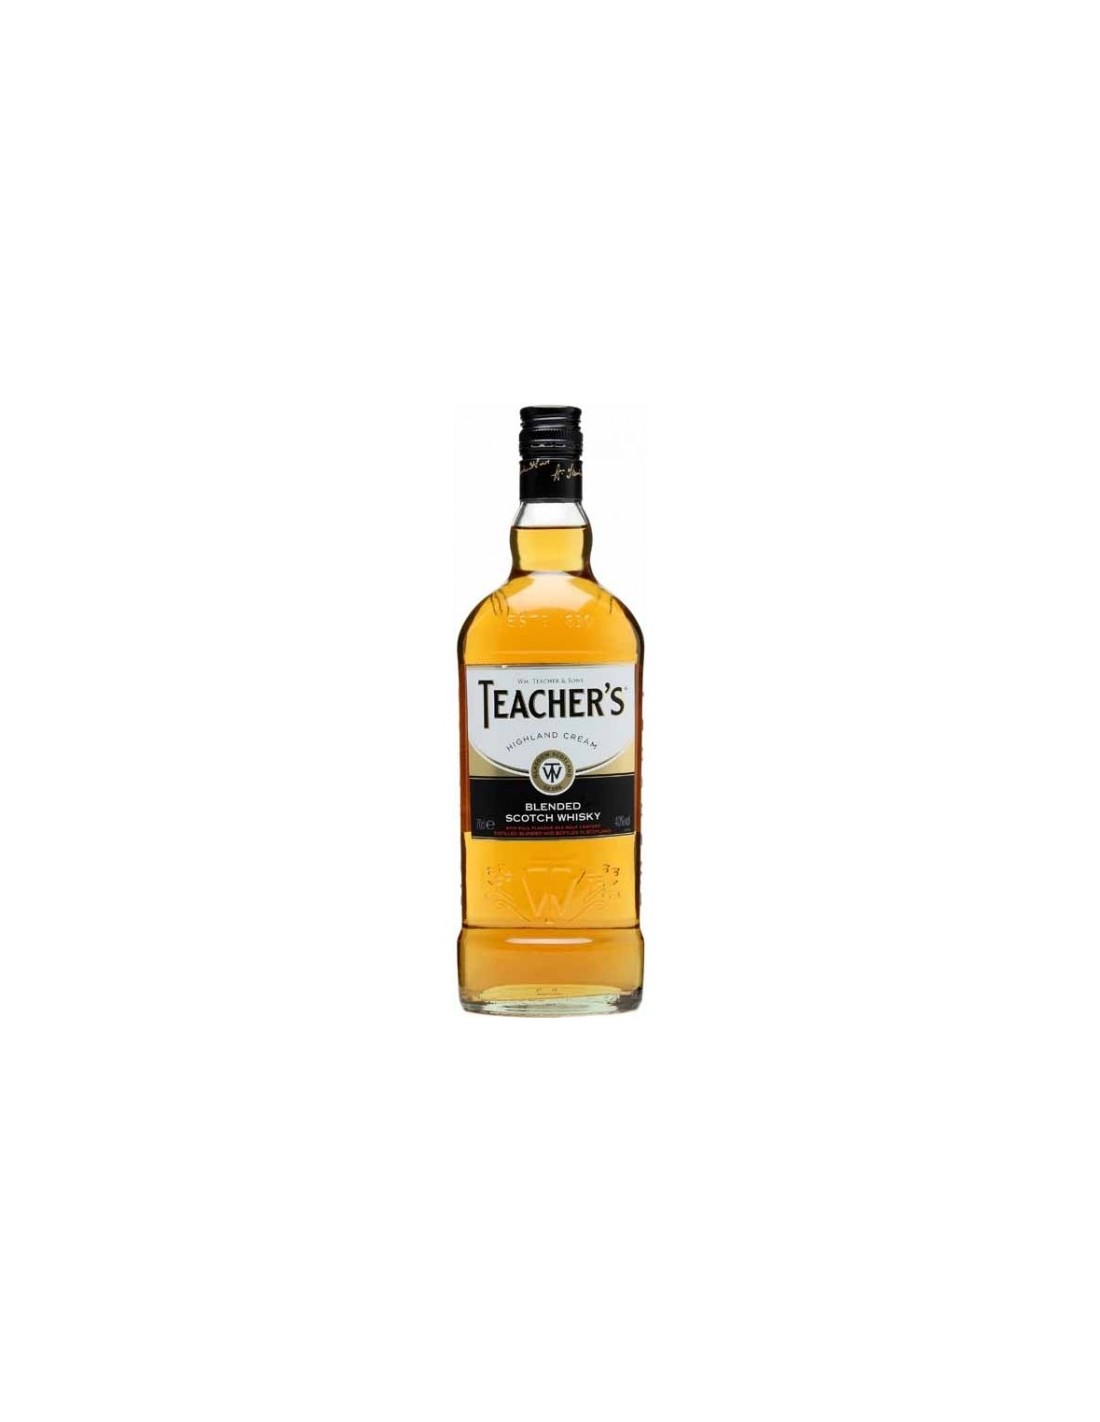 Whisky Teacher's, 40% alc., 0.7L, Scotia